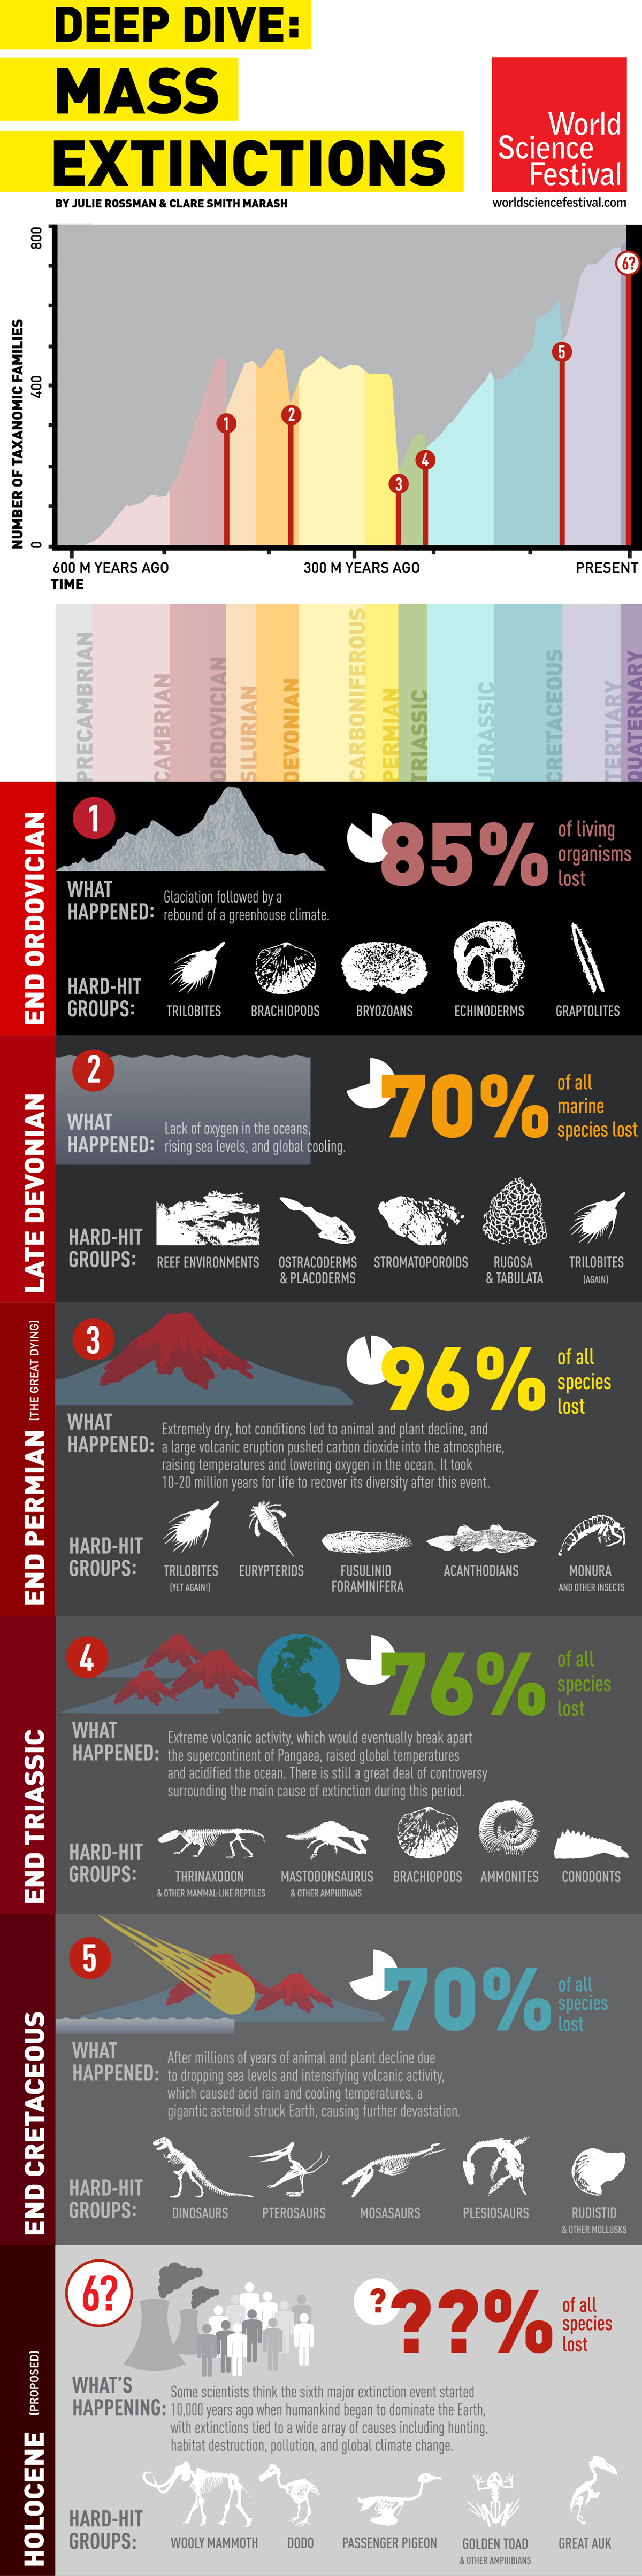 Mass-Extinctions_Infographic